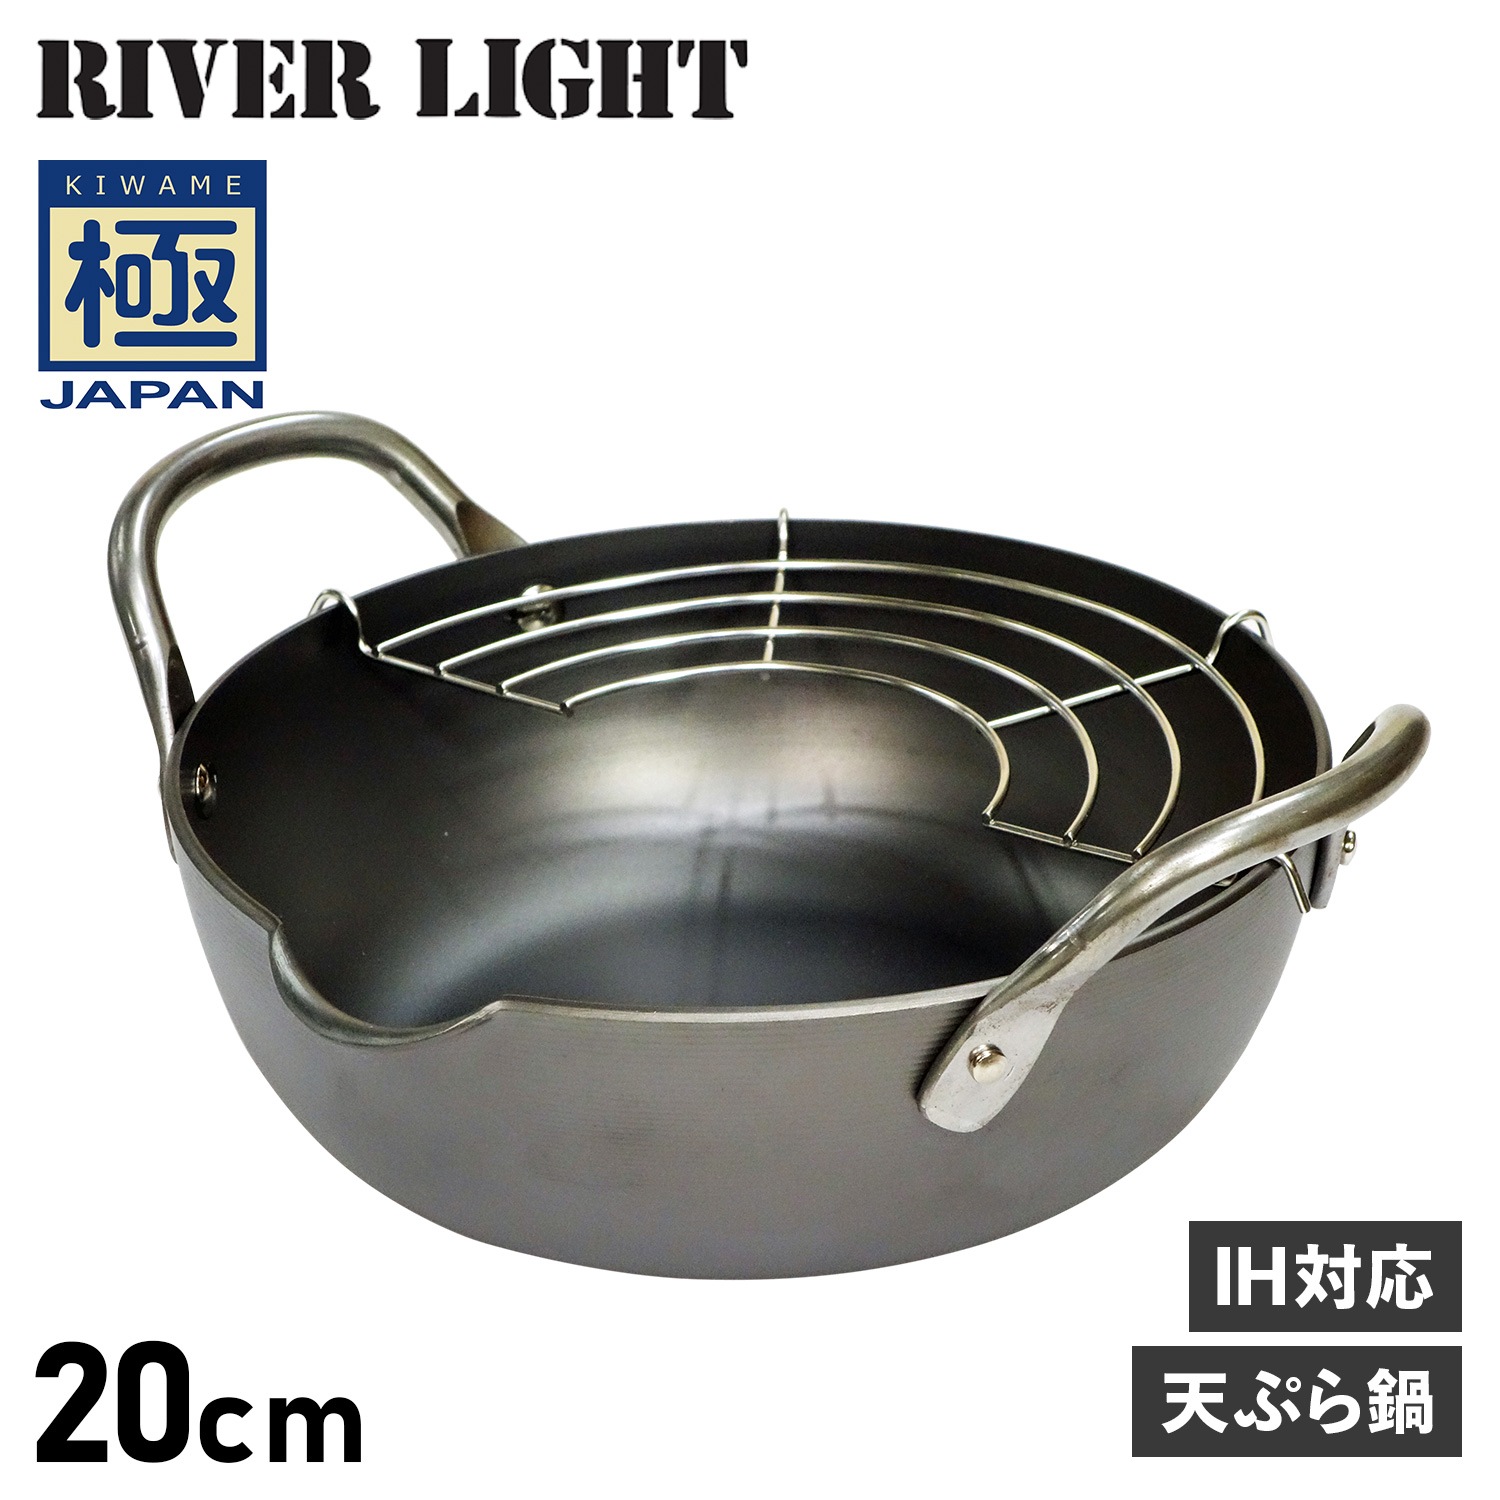 RIVER LIGHT極 天ぷら鍋 揚げ鍋 両手鍋 20cm IH ガス対応 鉄 極JAPAN J1320